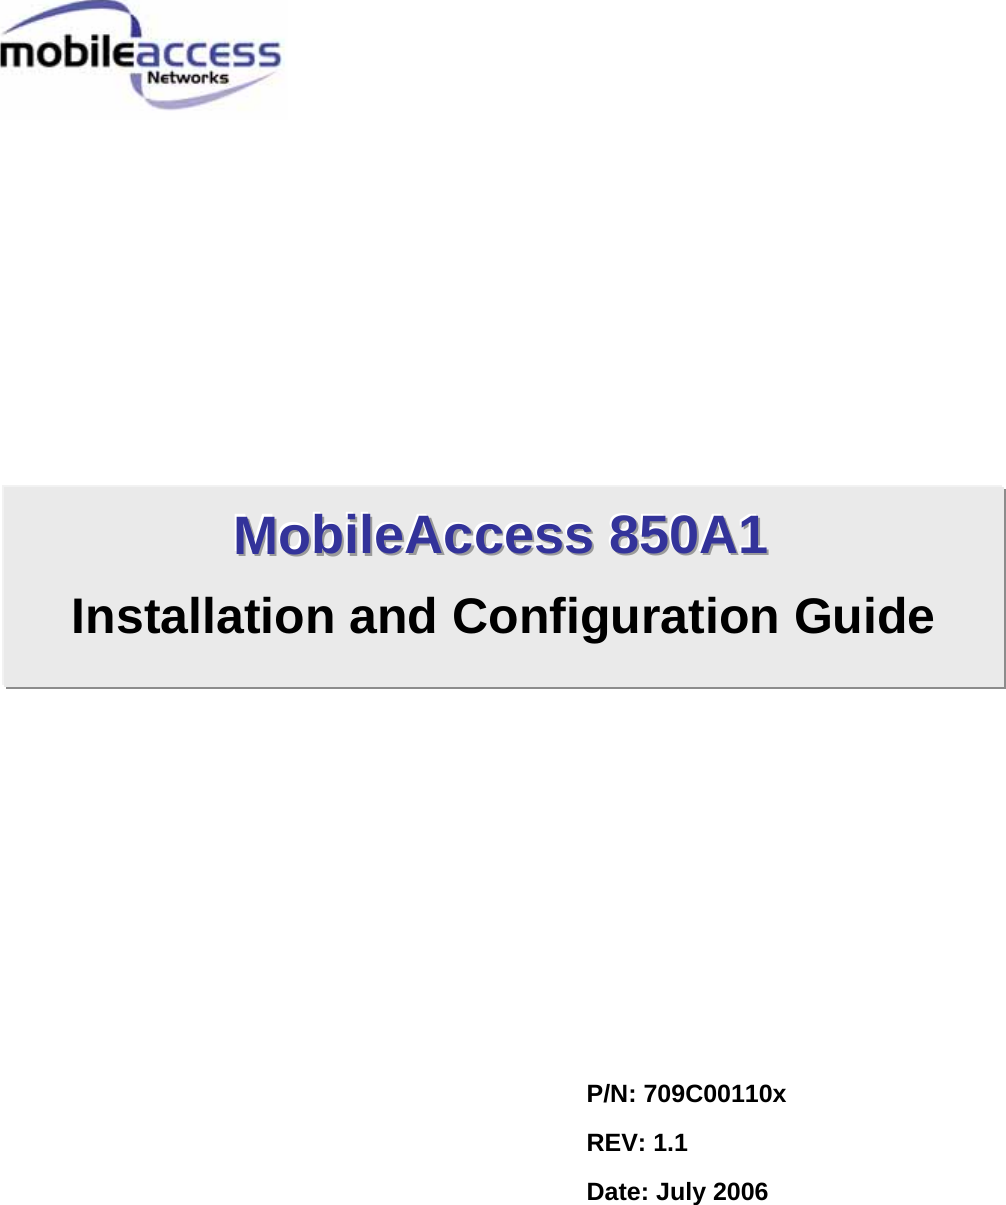                                            P/N: 709C00110x REV: 1.1 Date: July 2006 MMMooobbbiiillleeeAAAcccccceeessssss   888555000AAA111   Installation and Configuration Guide   